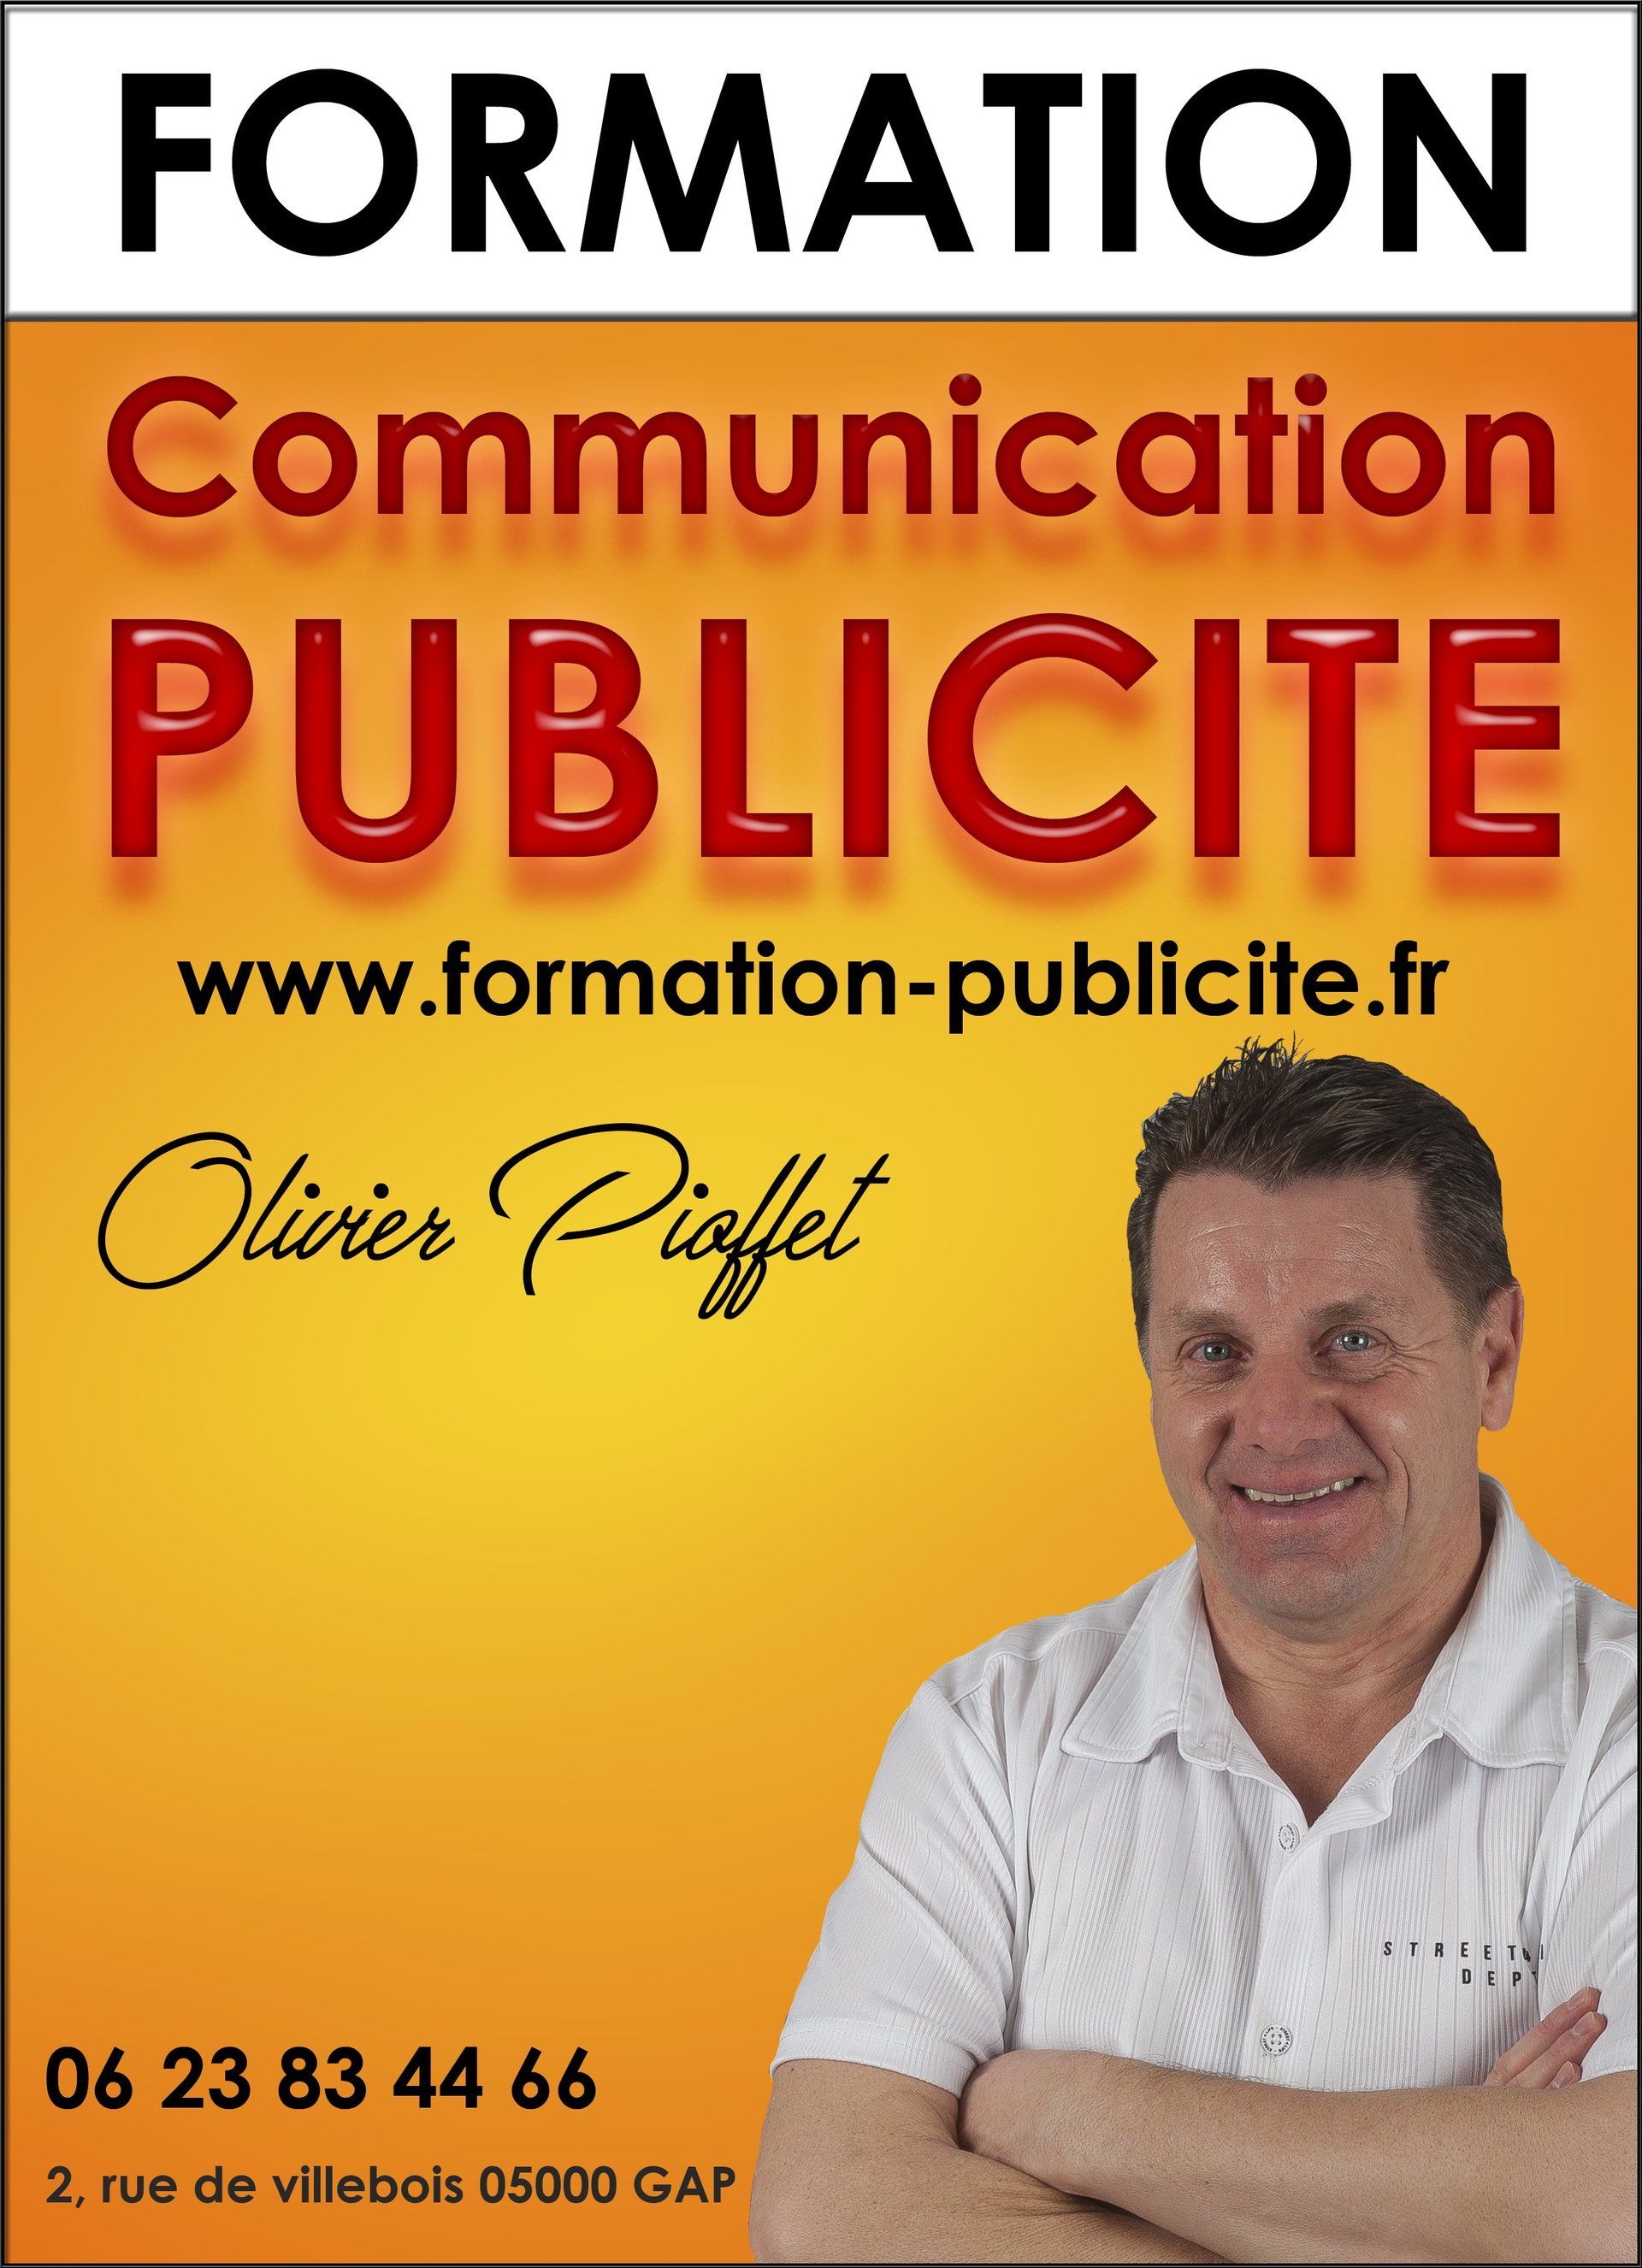 www.formation-publicite.fr